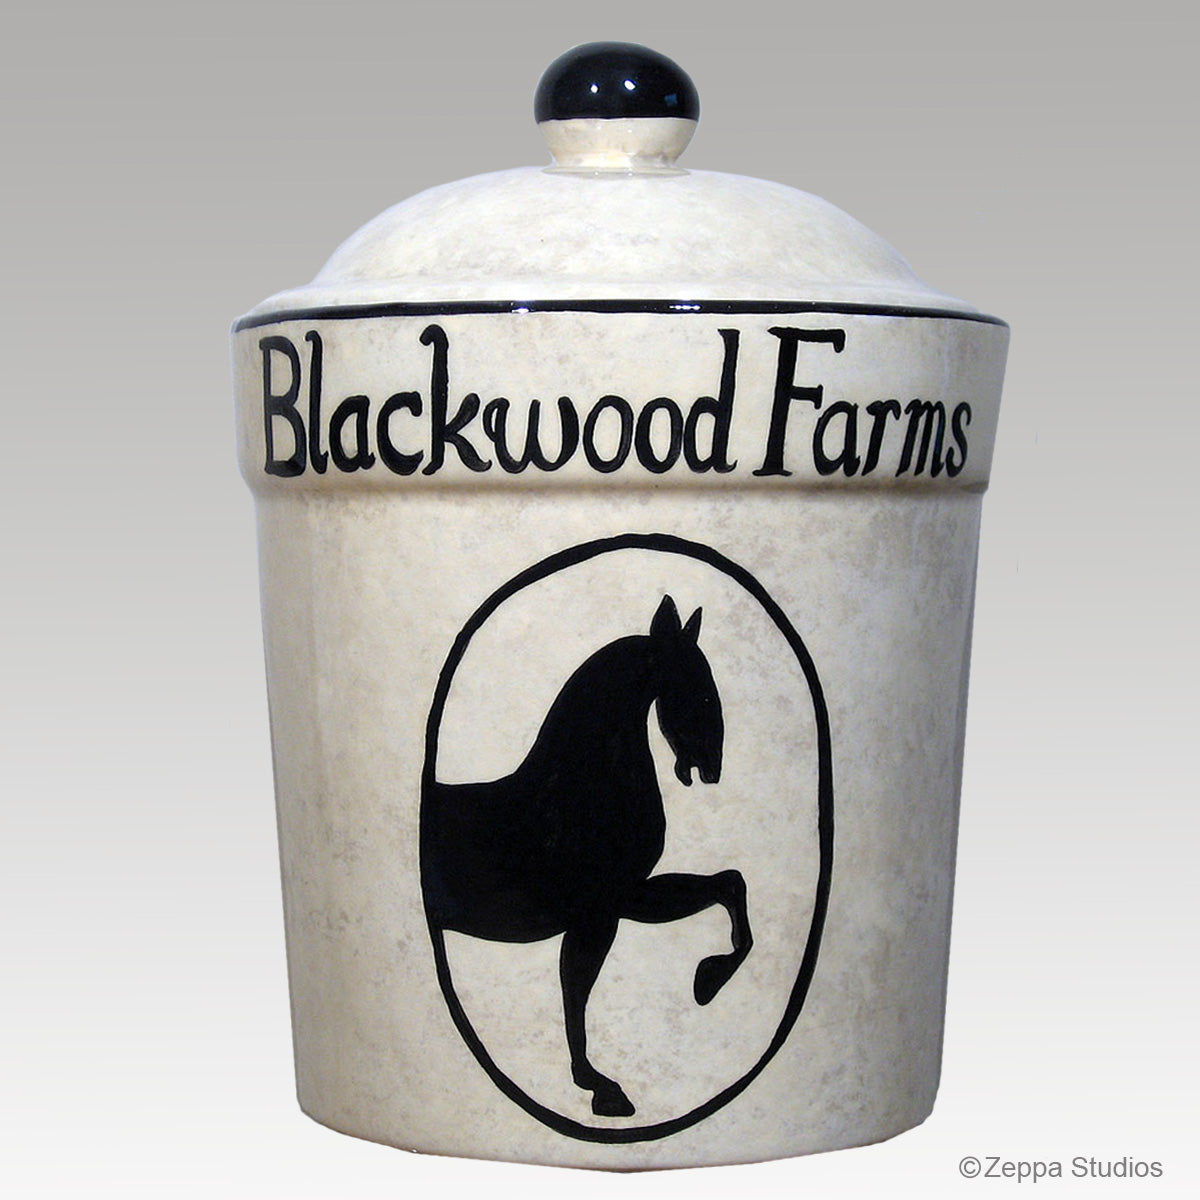 Custom Hand Painted Ceramic Treat Jar, "Blackwood Farms", by Zeppa Studios